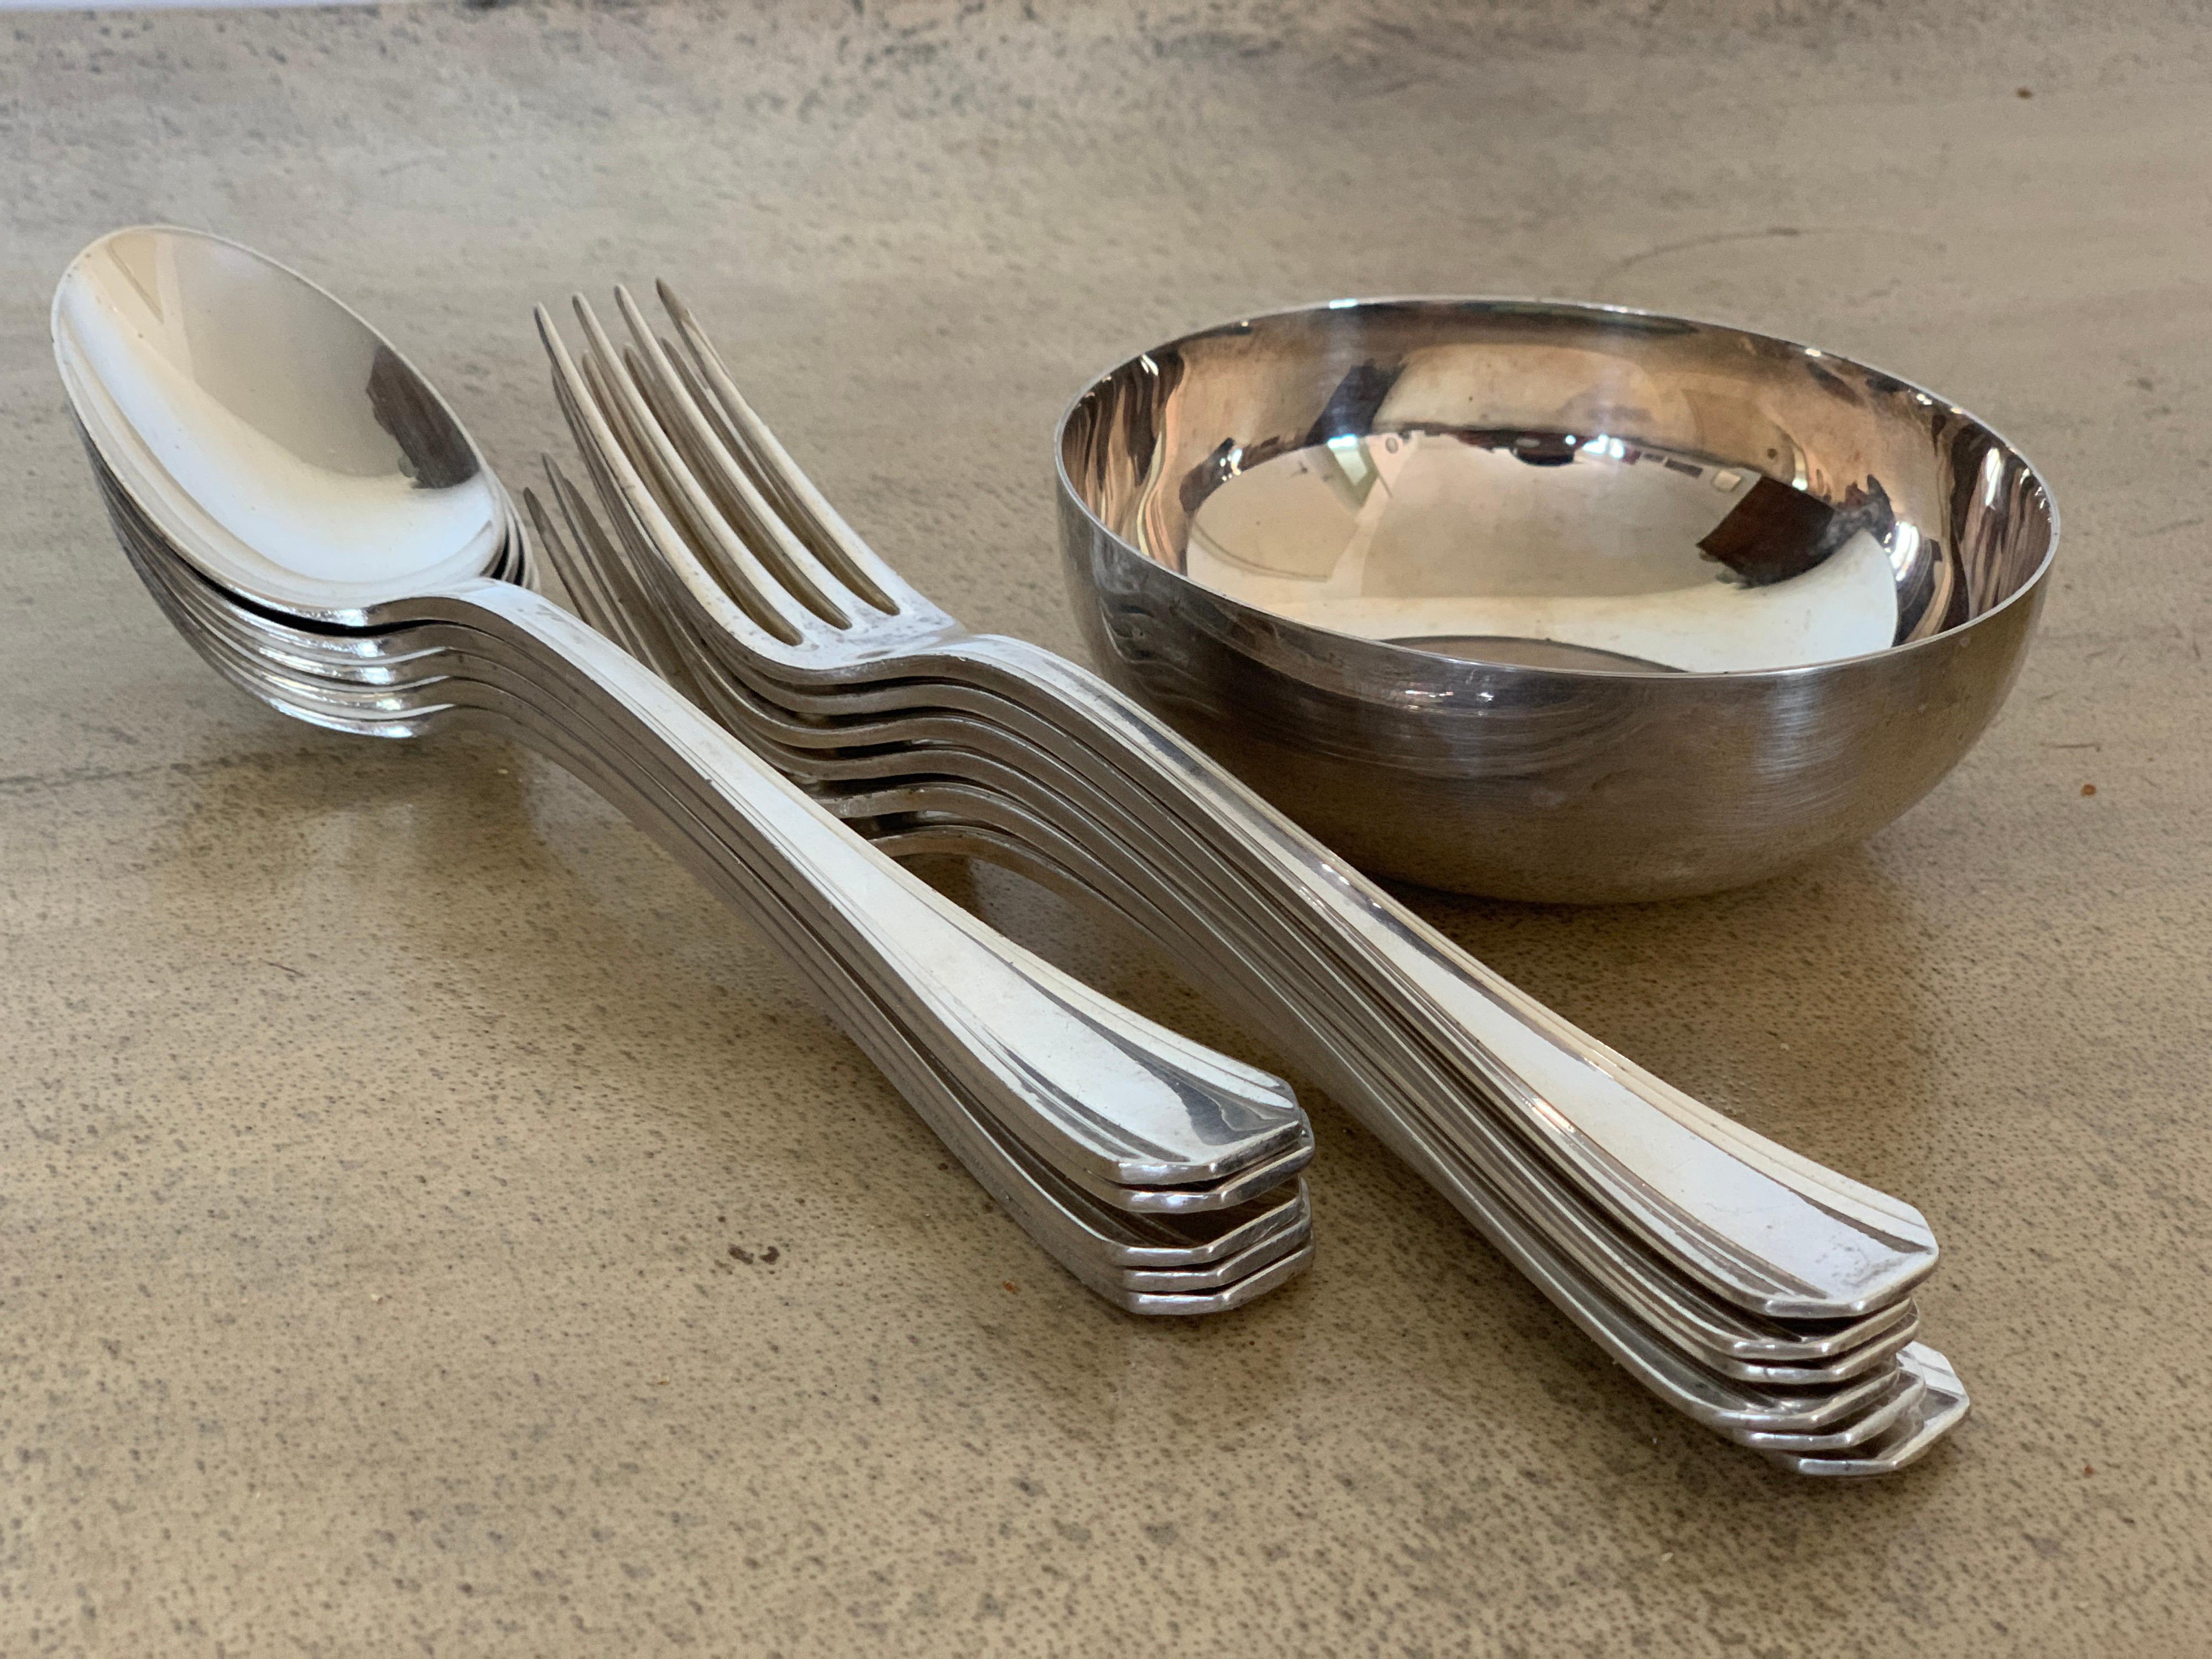 Christofle France Sterling Silver Art Deco Set
5 Main Dish Spoons
6 Main Dish Forks 
1 medium Bowl